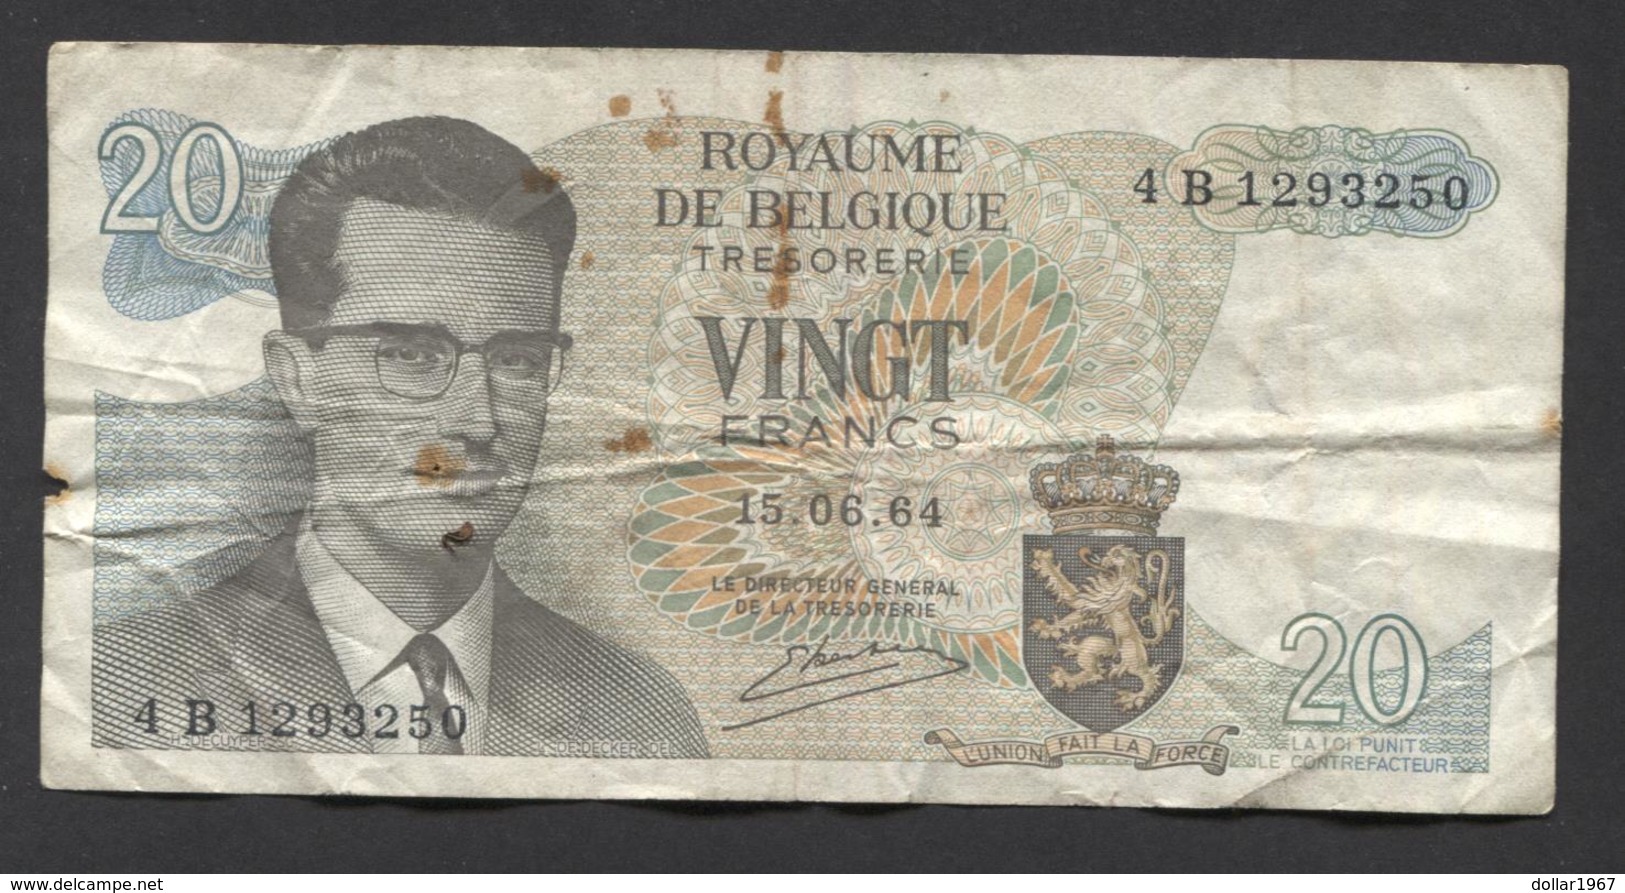 België Belgique Belgium 15 06 1964 -  20 Francs Atomium Baudouin. 4 B 1293250 - 20 Francos